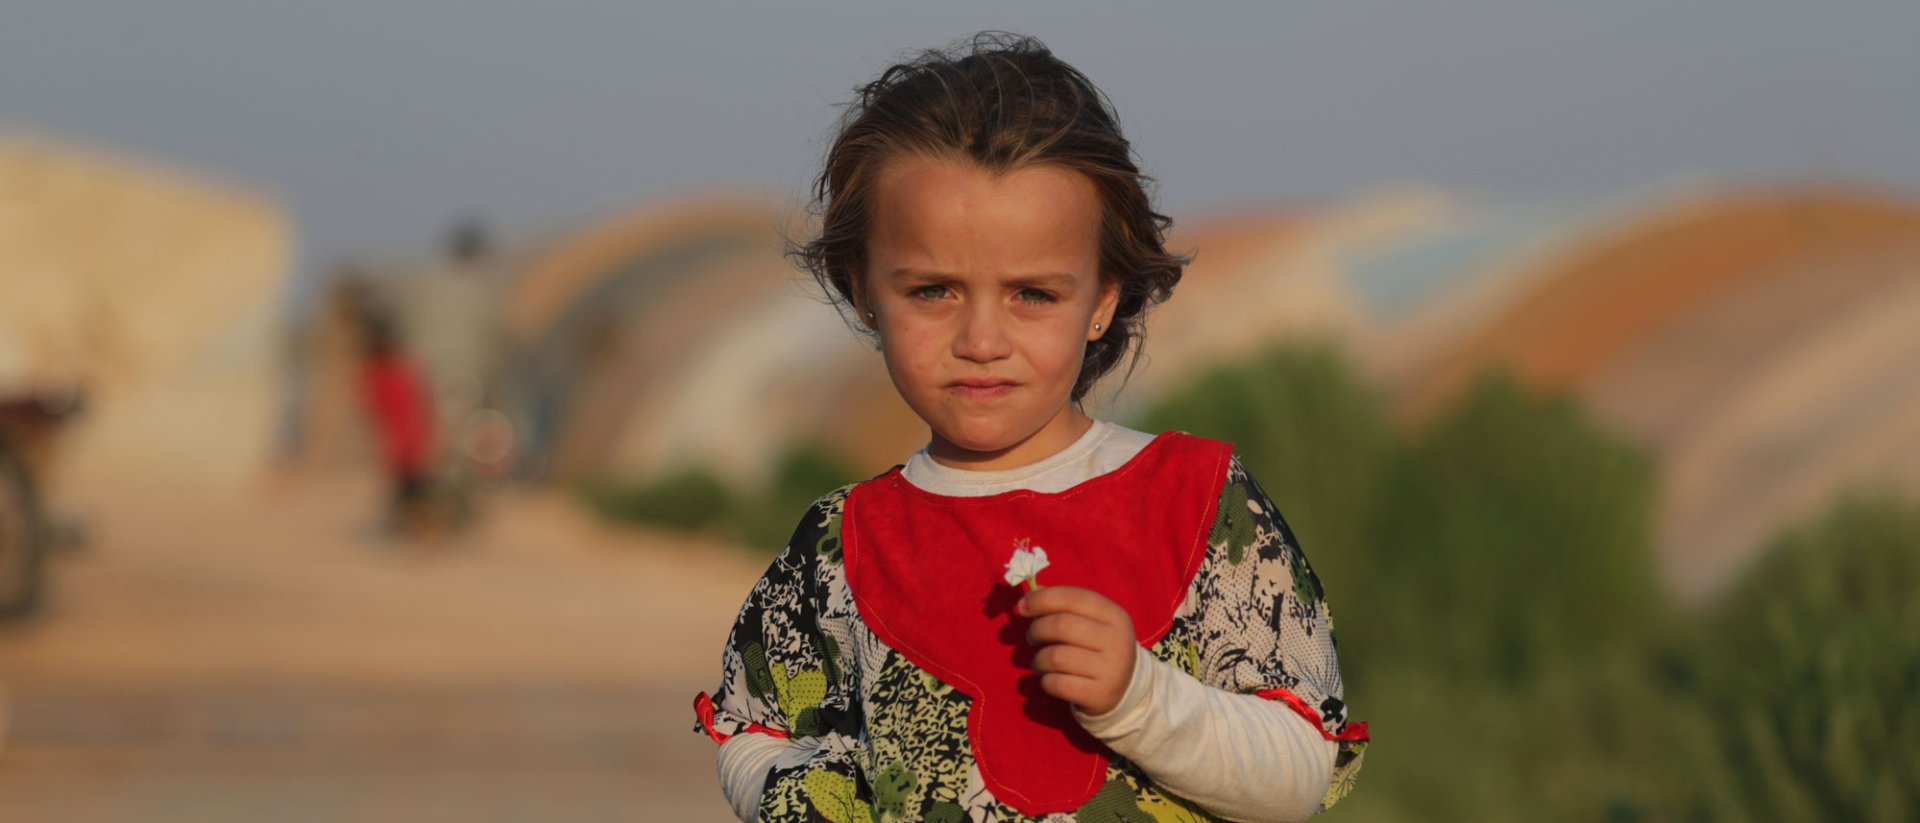 Abeer, una niña refugiada siria